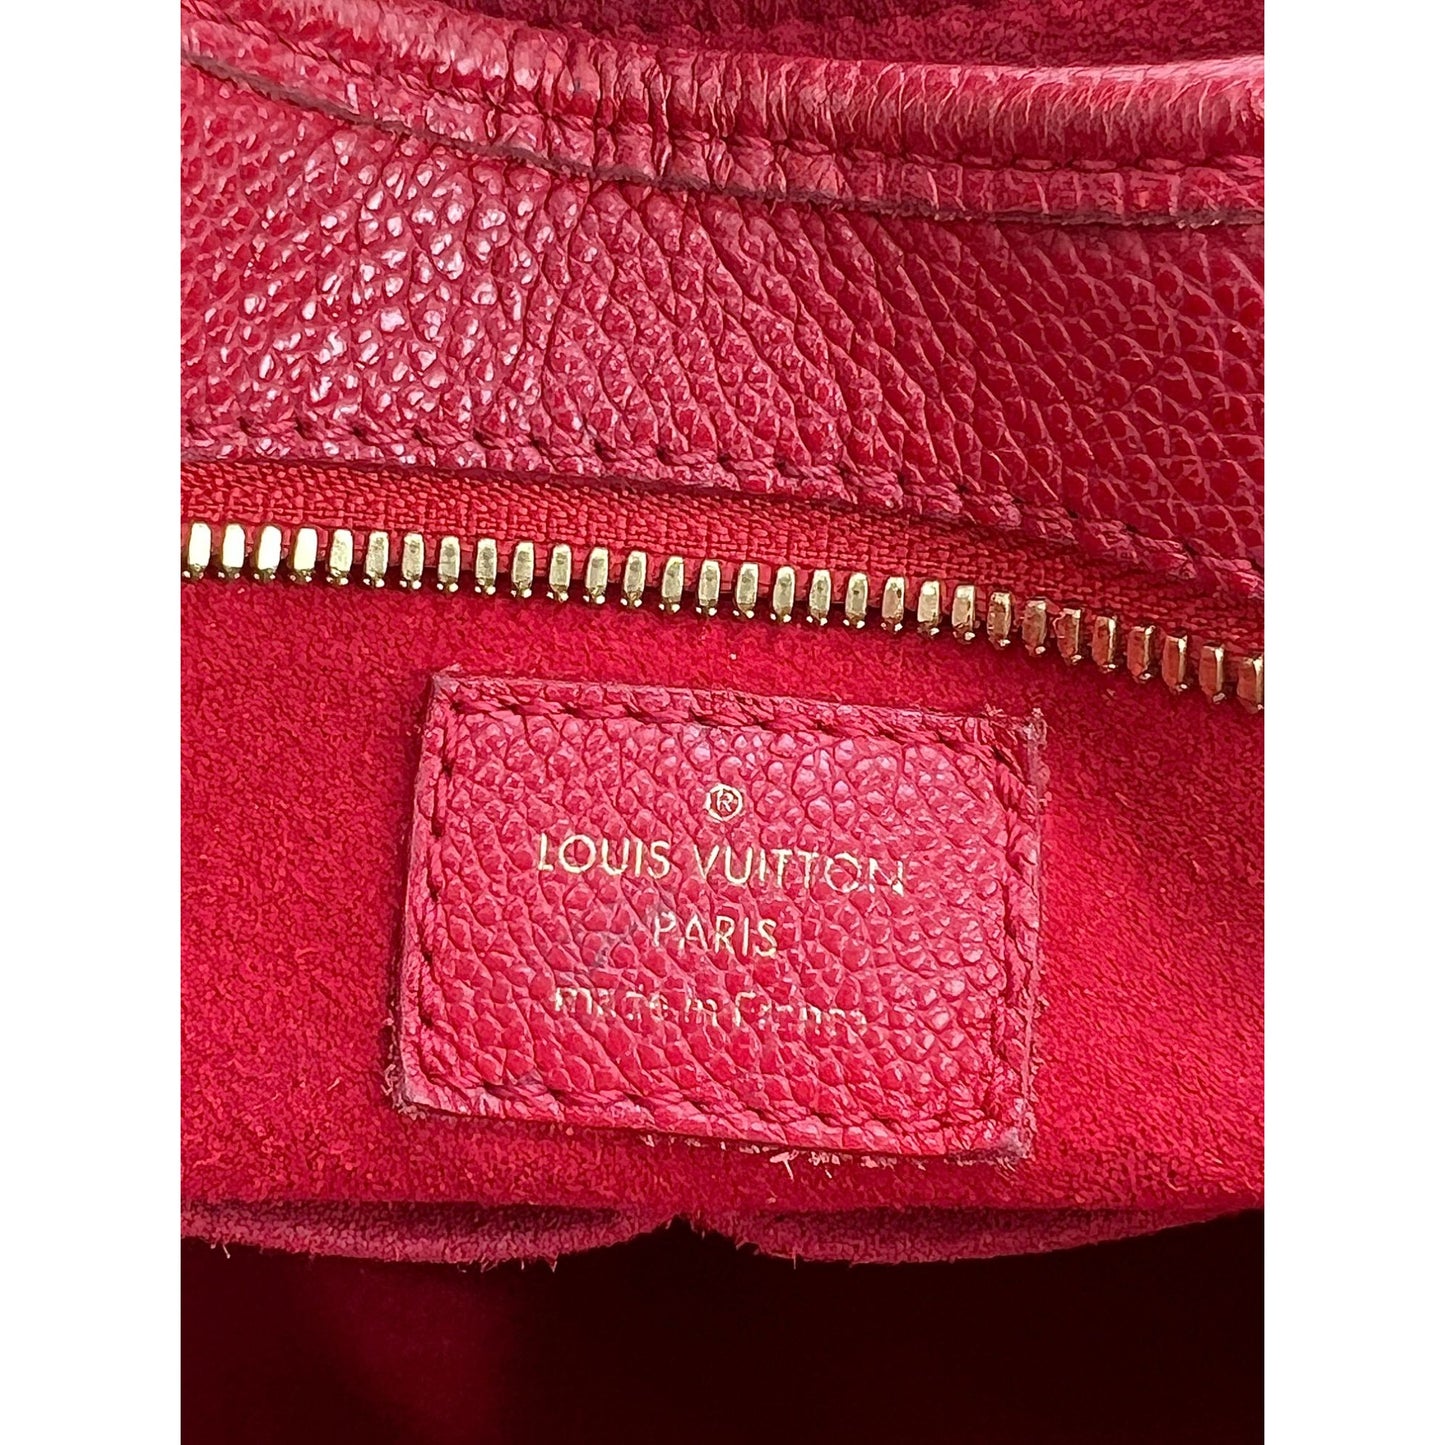 LOUIS VUITTON Popincourt MM Monogram Red Leather Shoulder Hand Bag